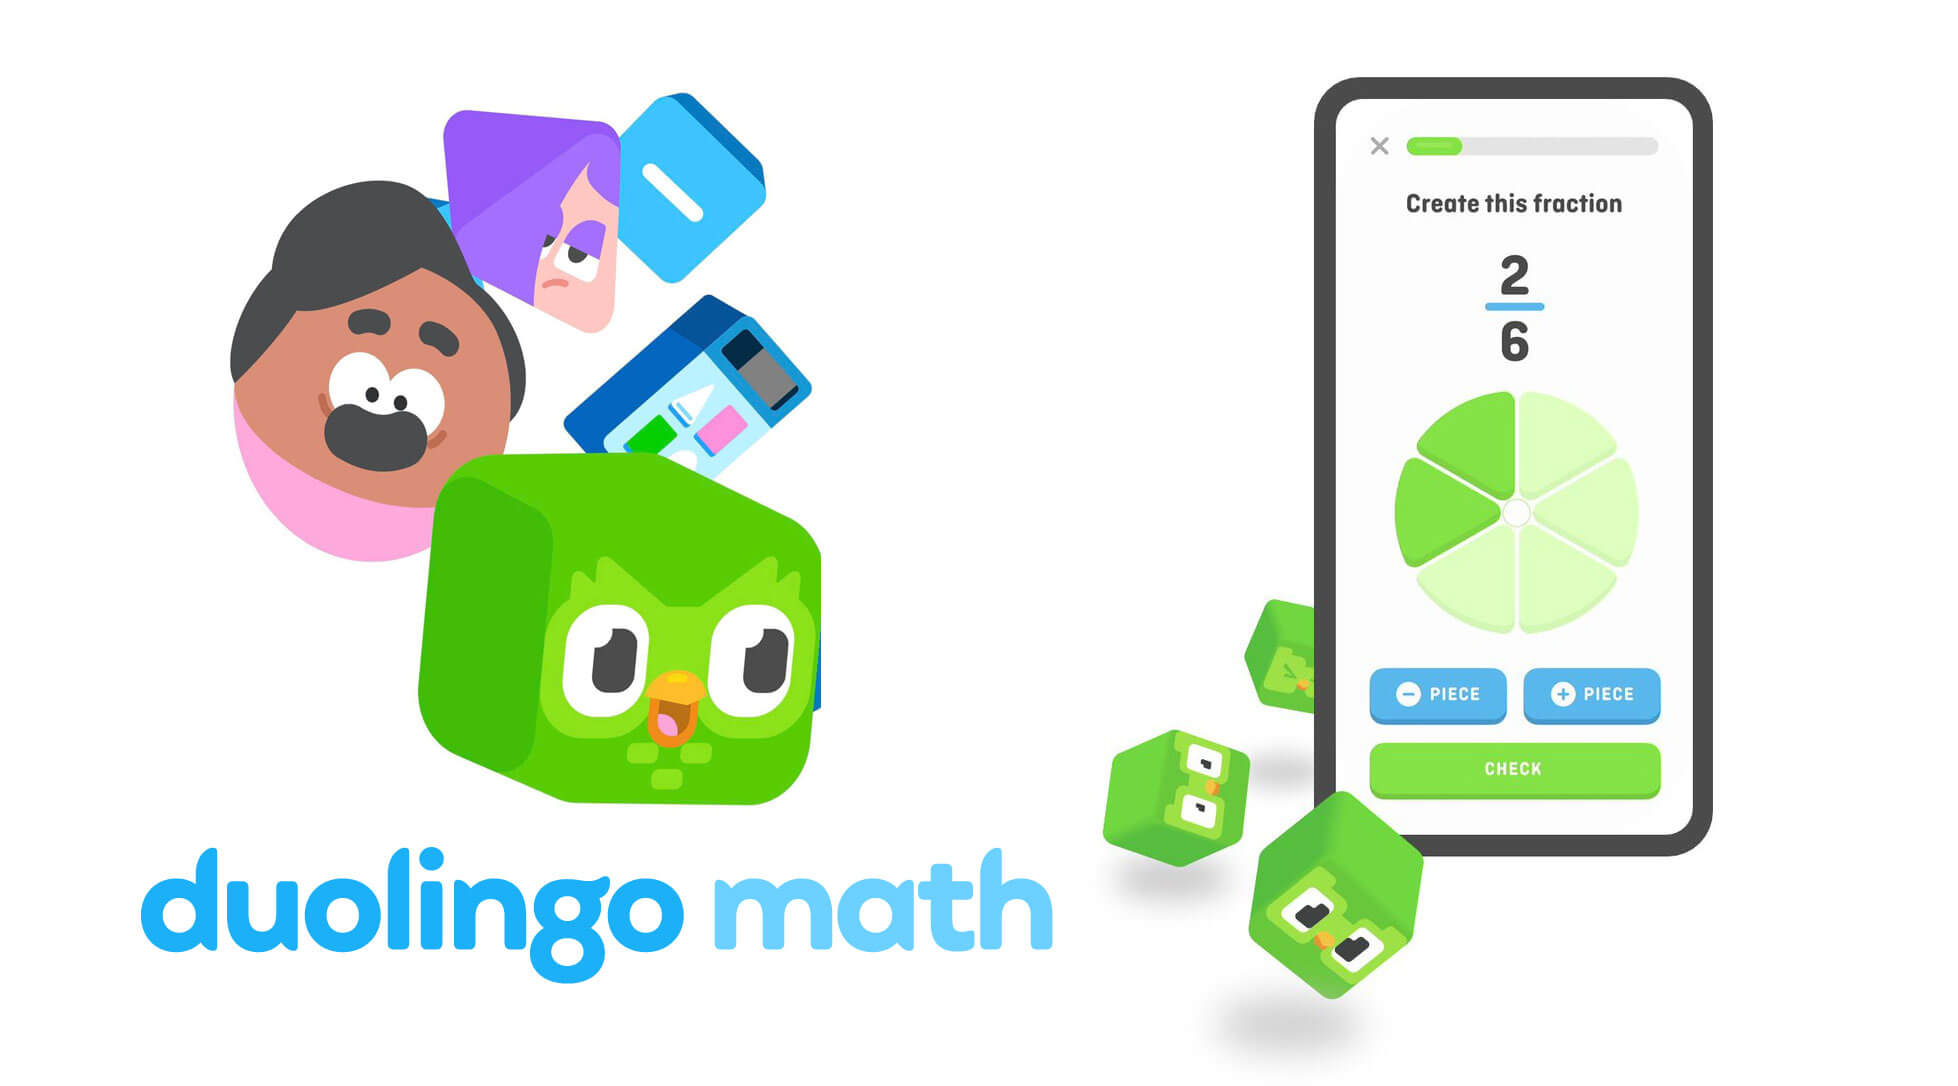 Duolingo Math